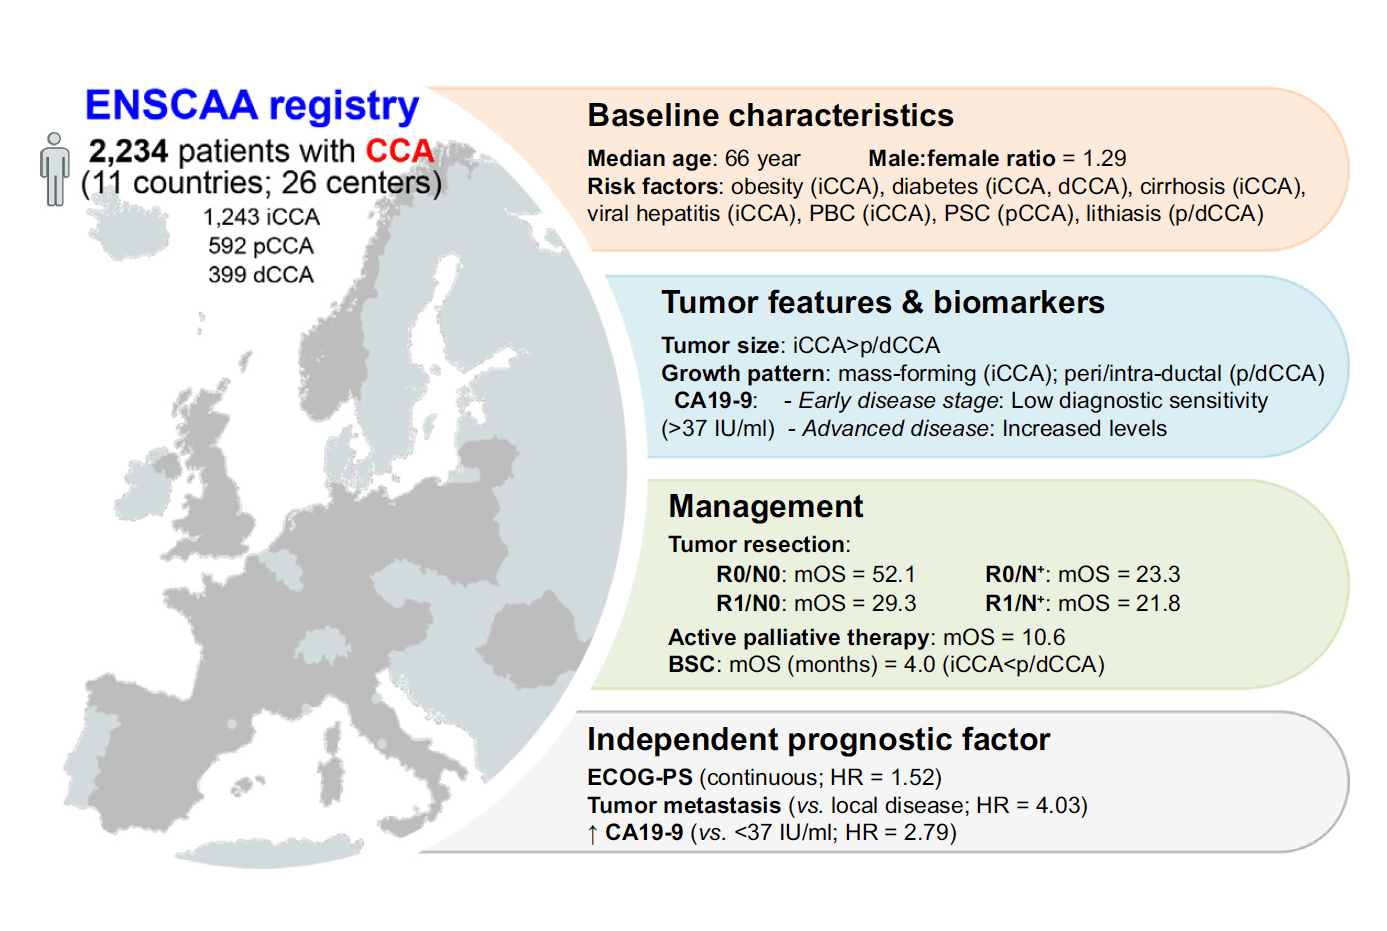 ENSCCA Registry